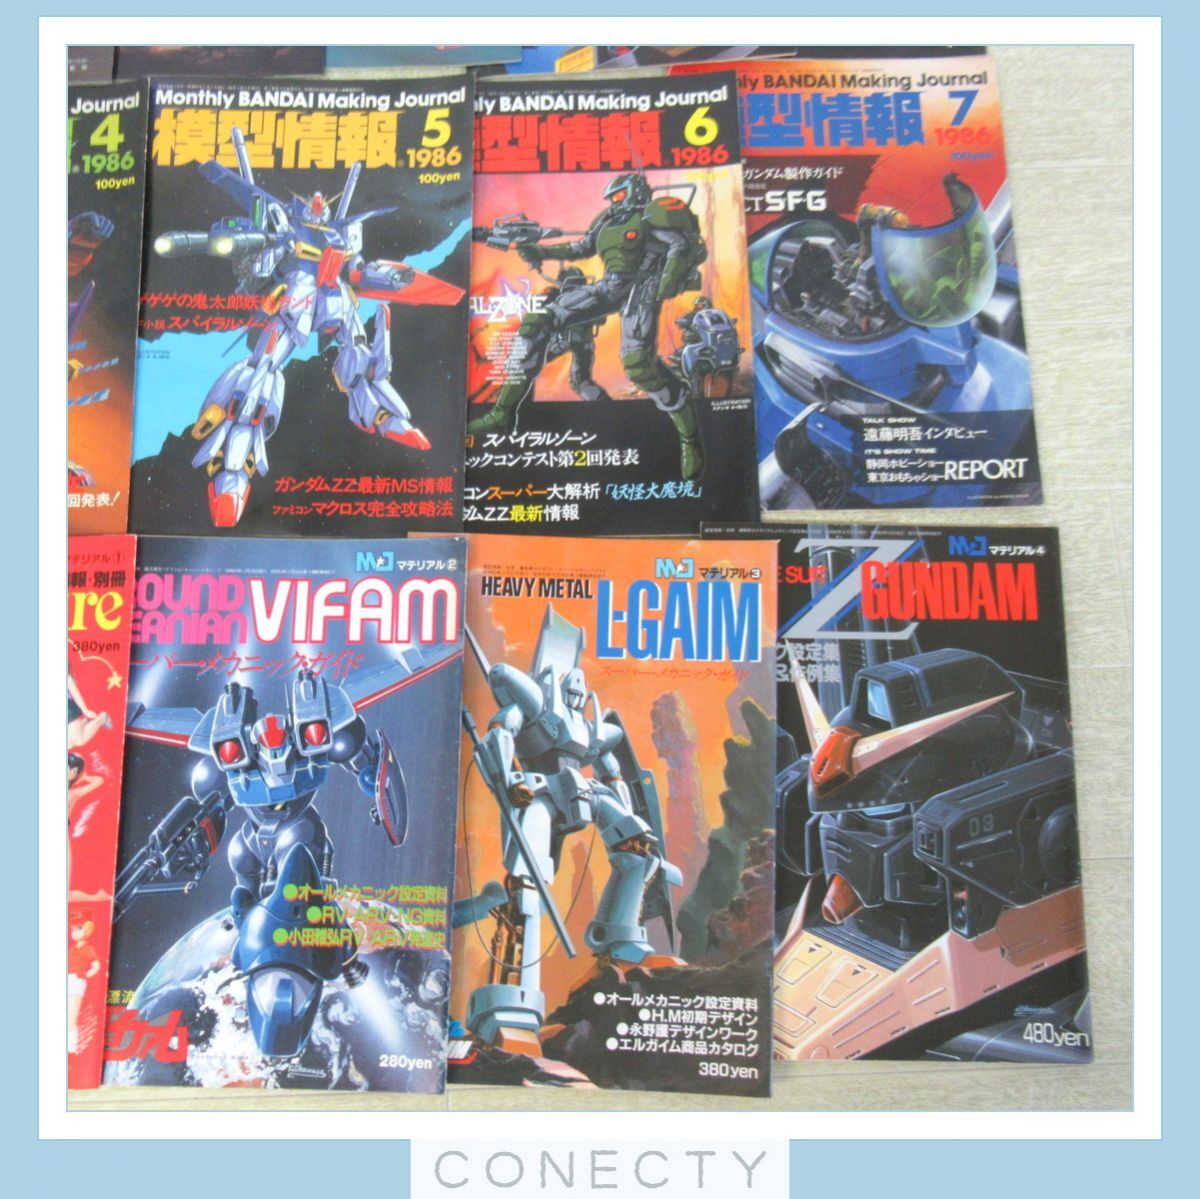  magazine model information 1984 year 12 month number ~1986 year 9 month number 64~85 number separate volume MJ material together 26 pcs. set Gundam / L gaim/baifam Showa era [U5[S2